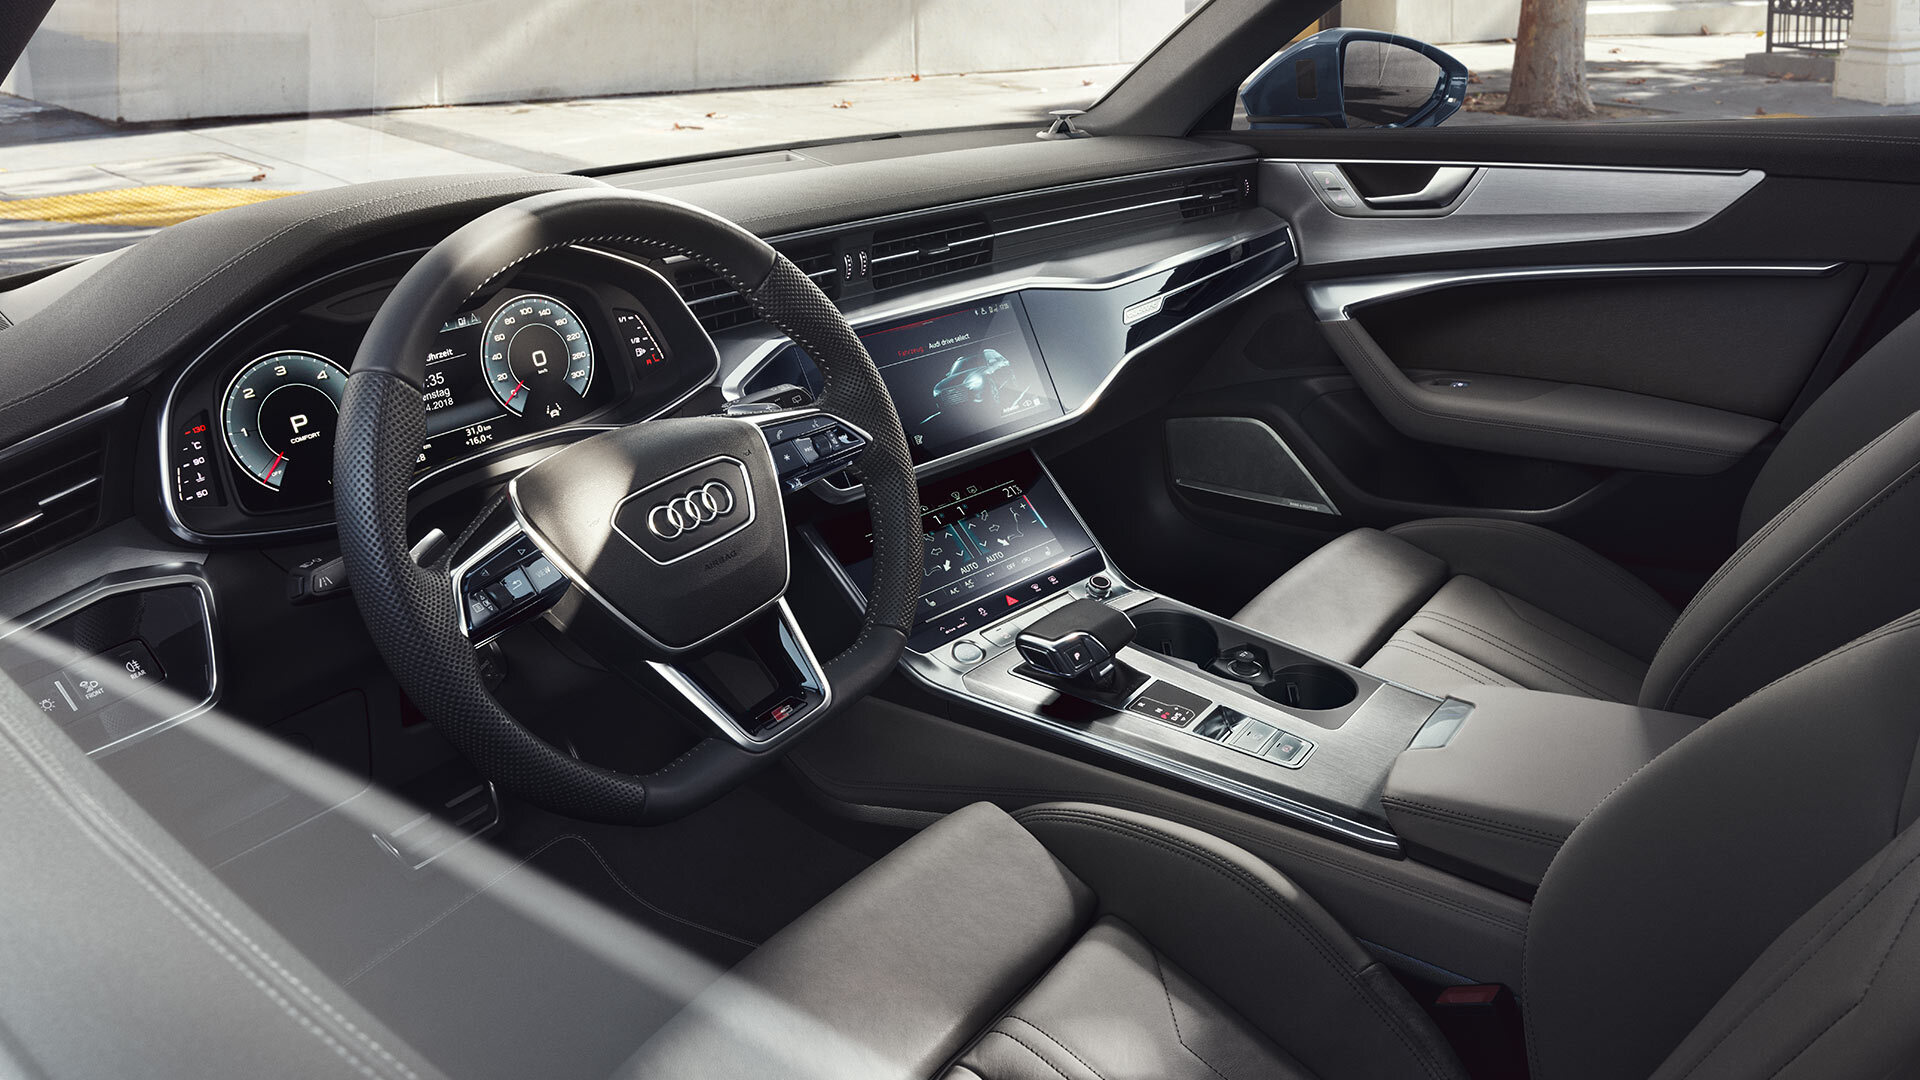 Audi A6 Innenraum, digital cockpit und Infotainment